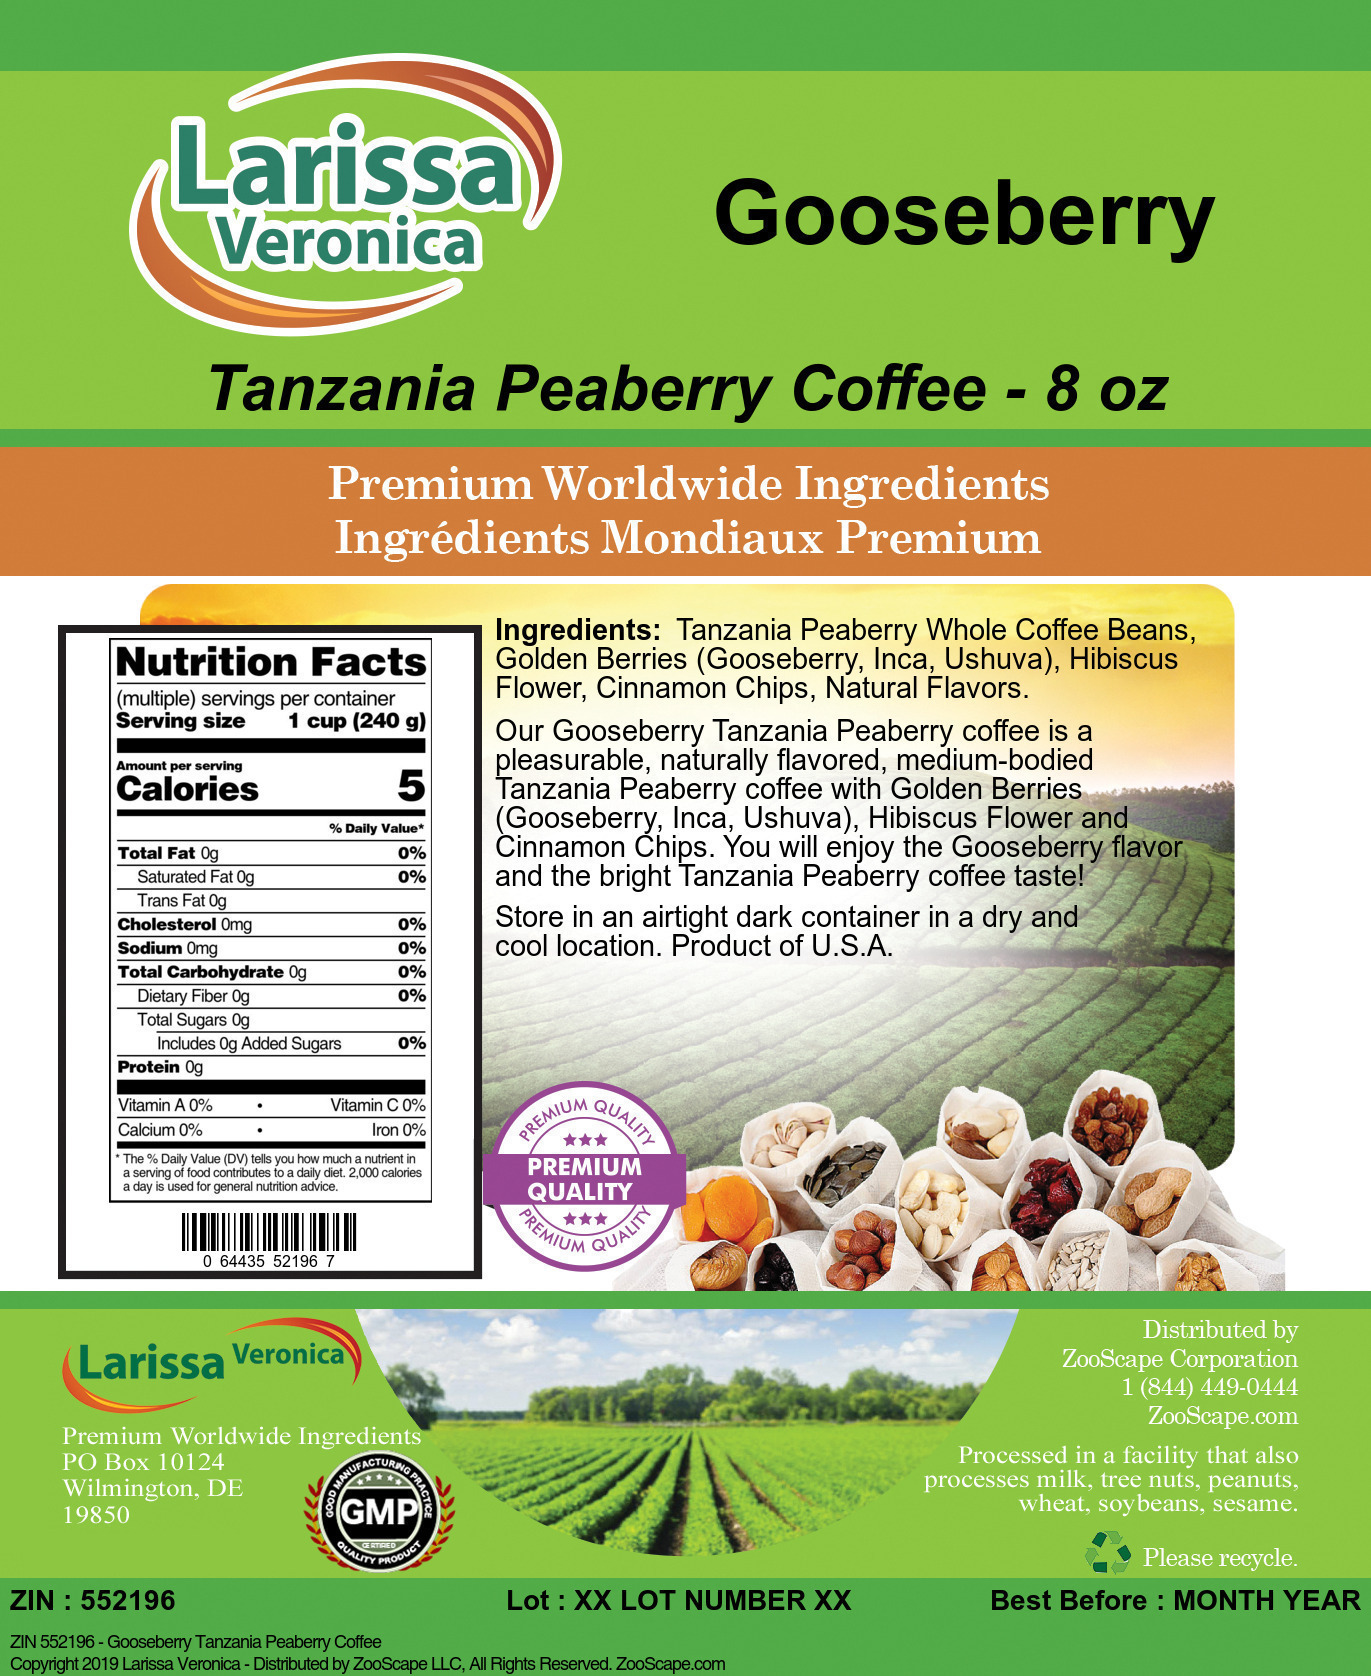 Gooseberry Tanzania Peaberry Coffee - Label